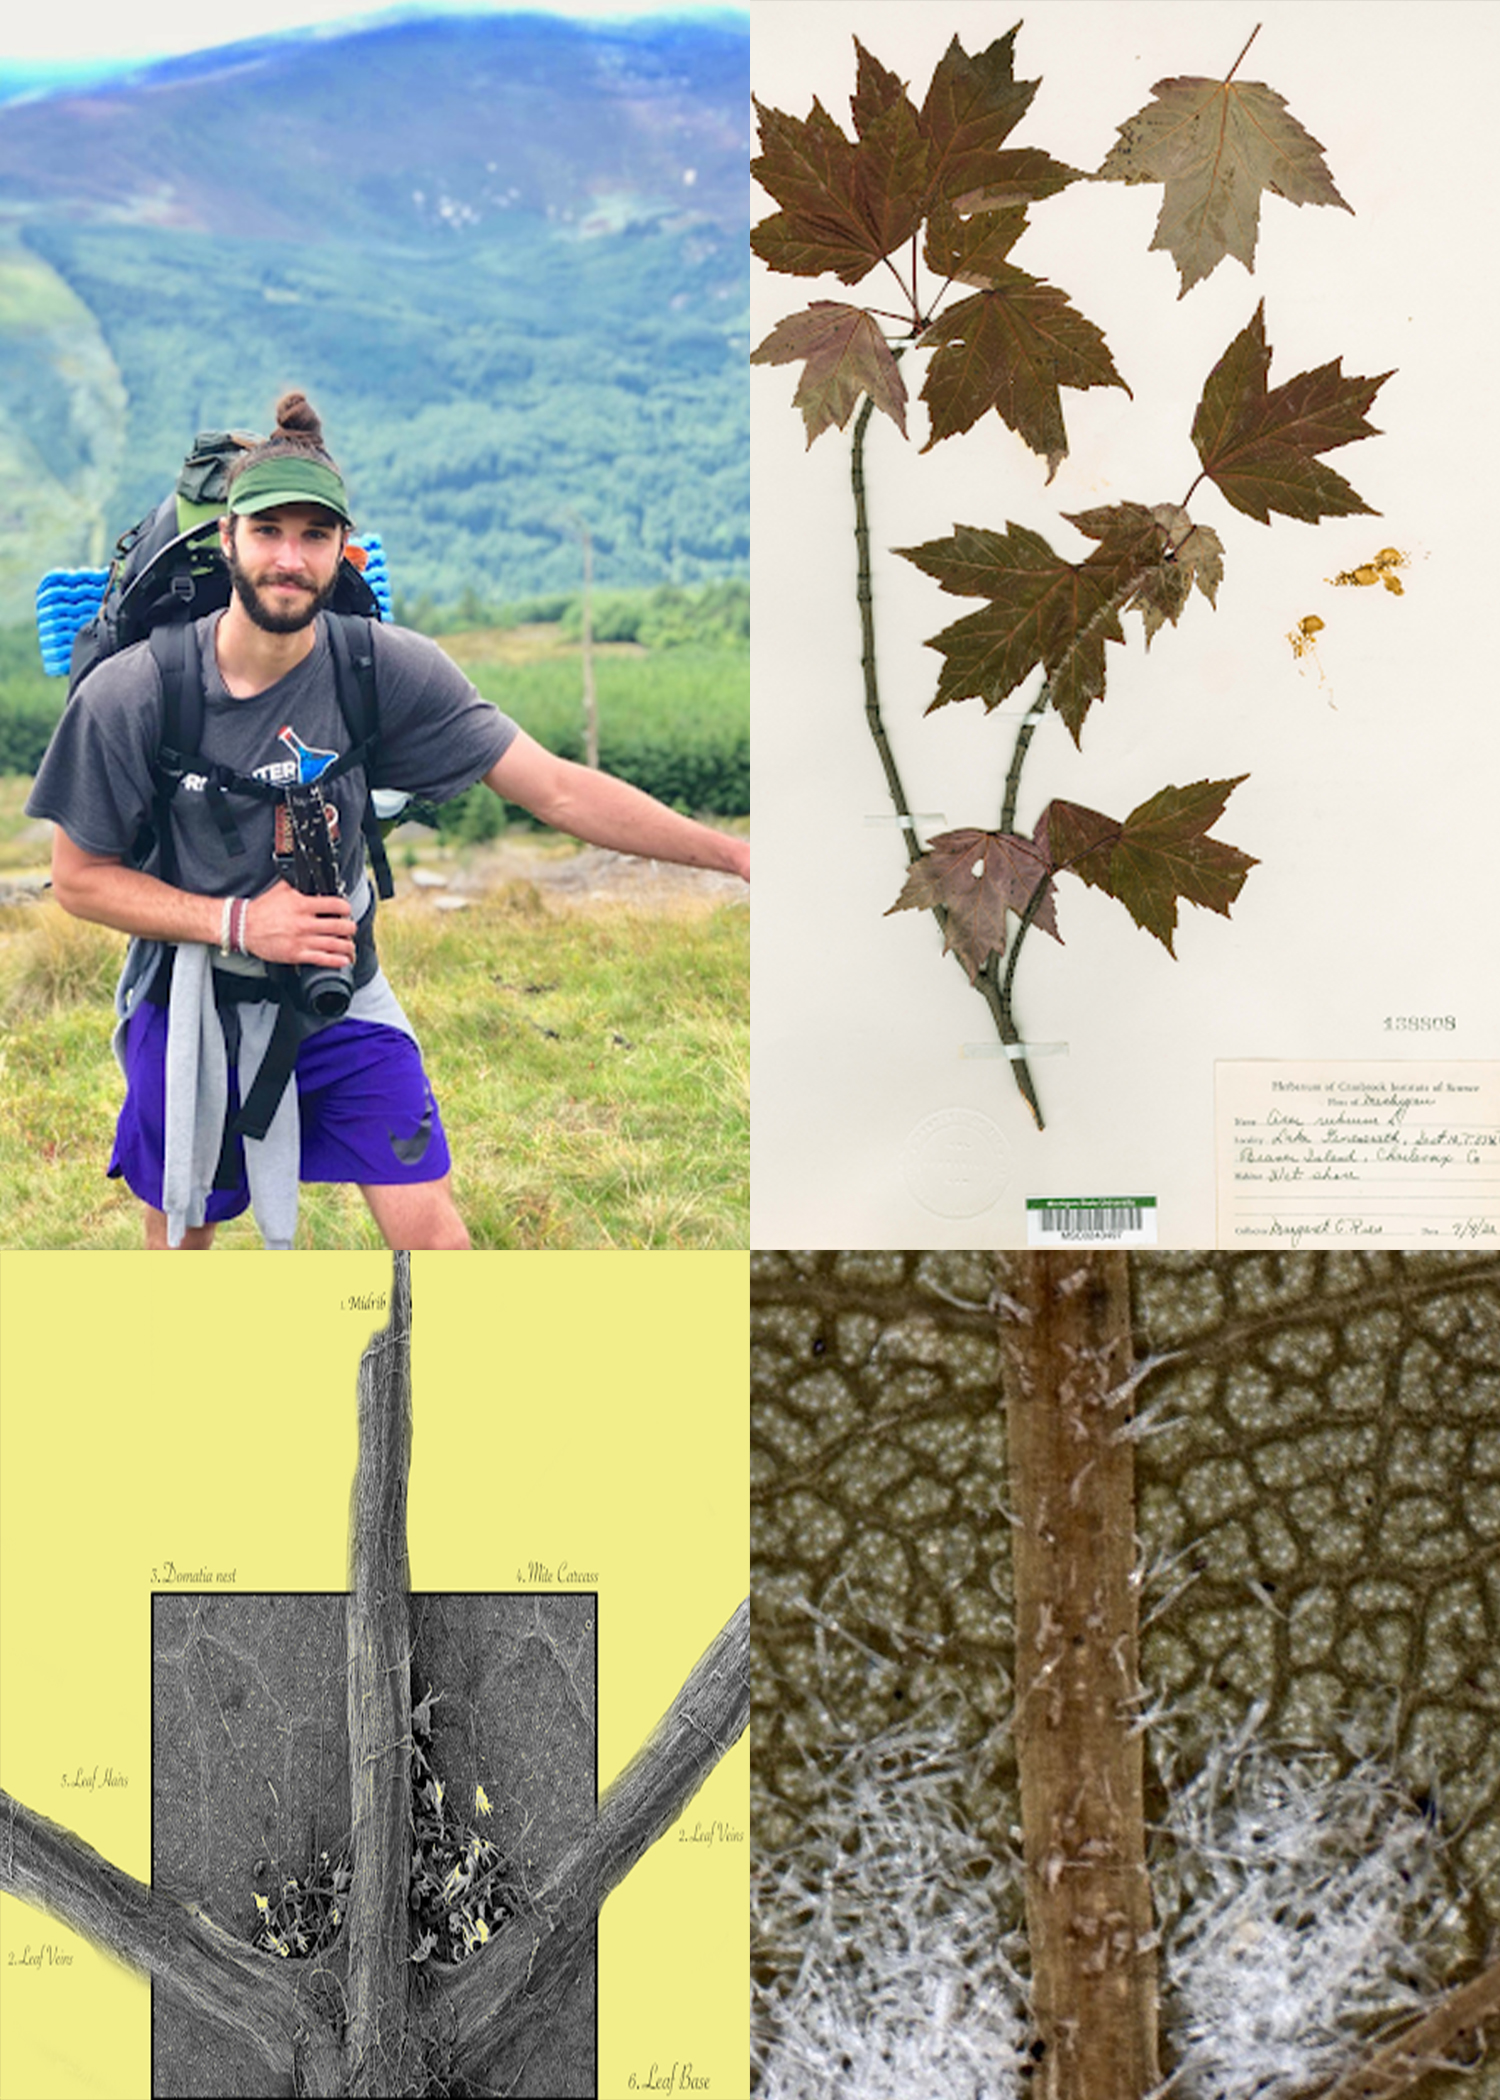 Top Left: Man in scenic area. Top Right: maple specimen. Bottom: microscope images of maple specimen